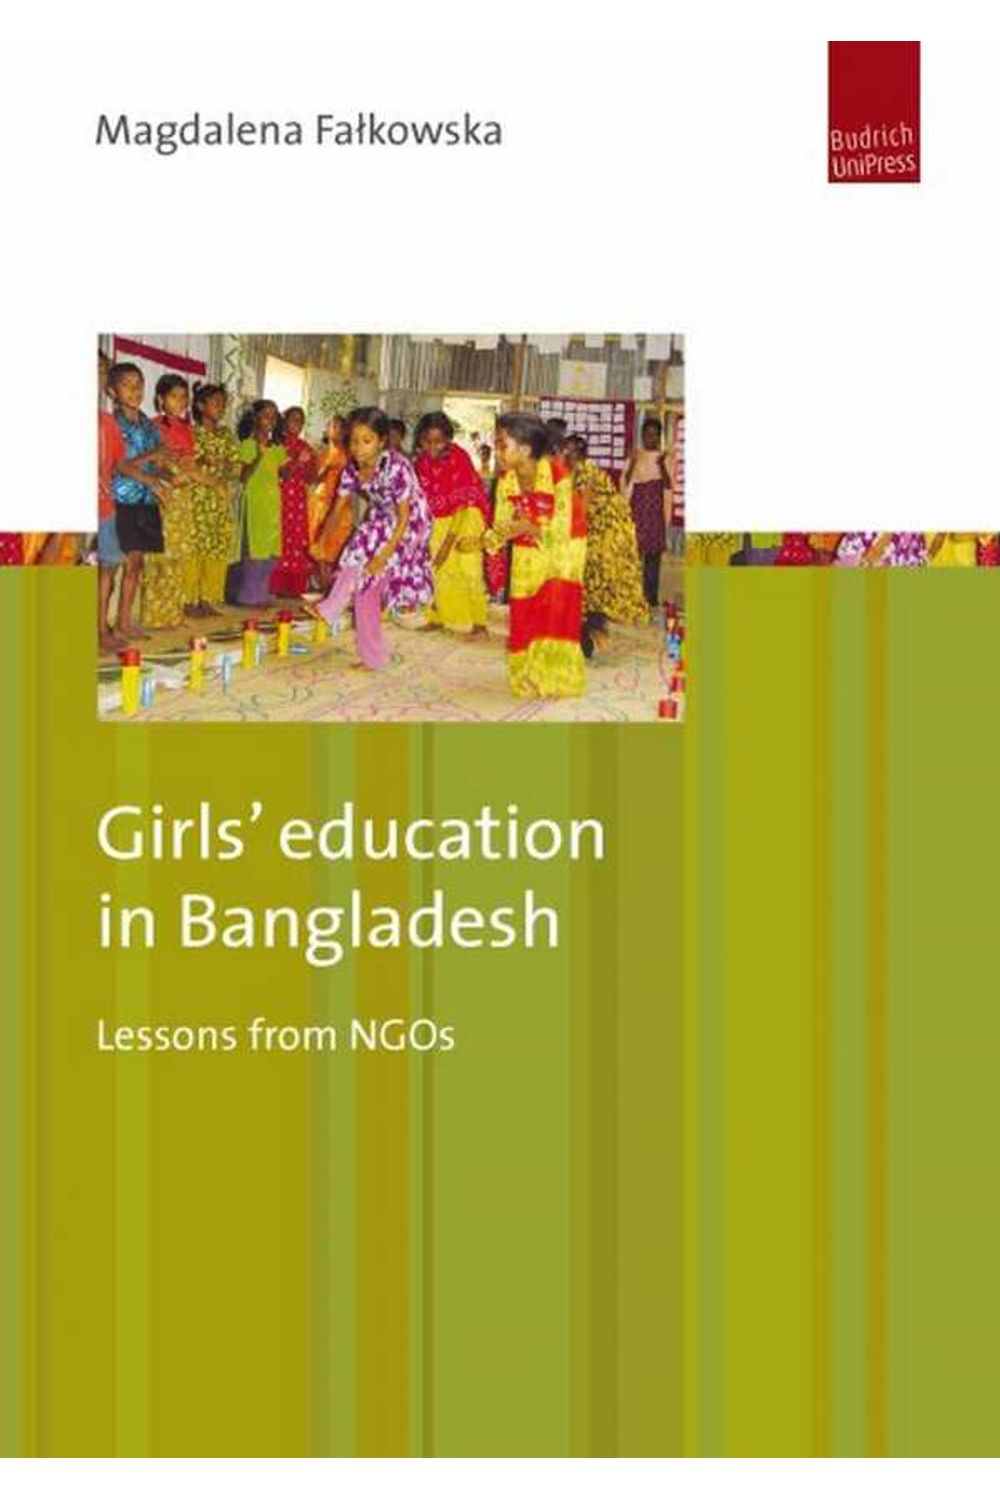 bw-girls-education-in-bangladesh-budrich-unipress-9783863881870